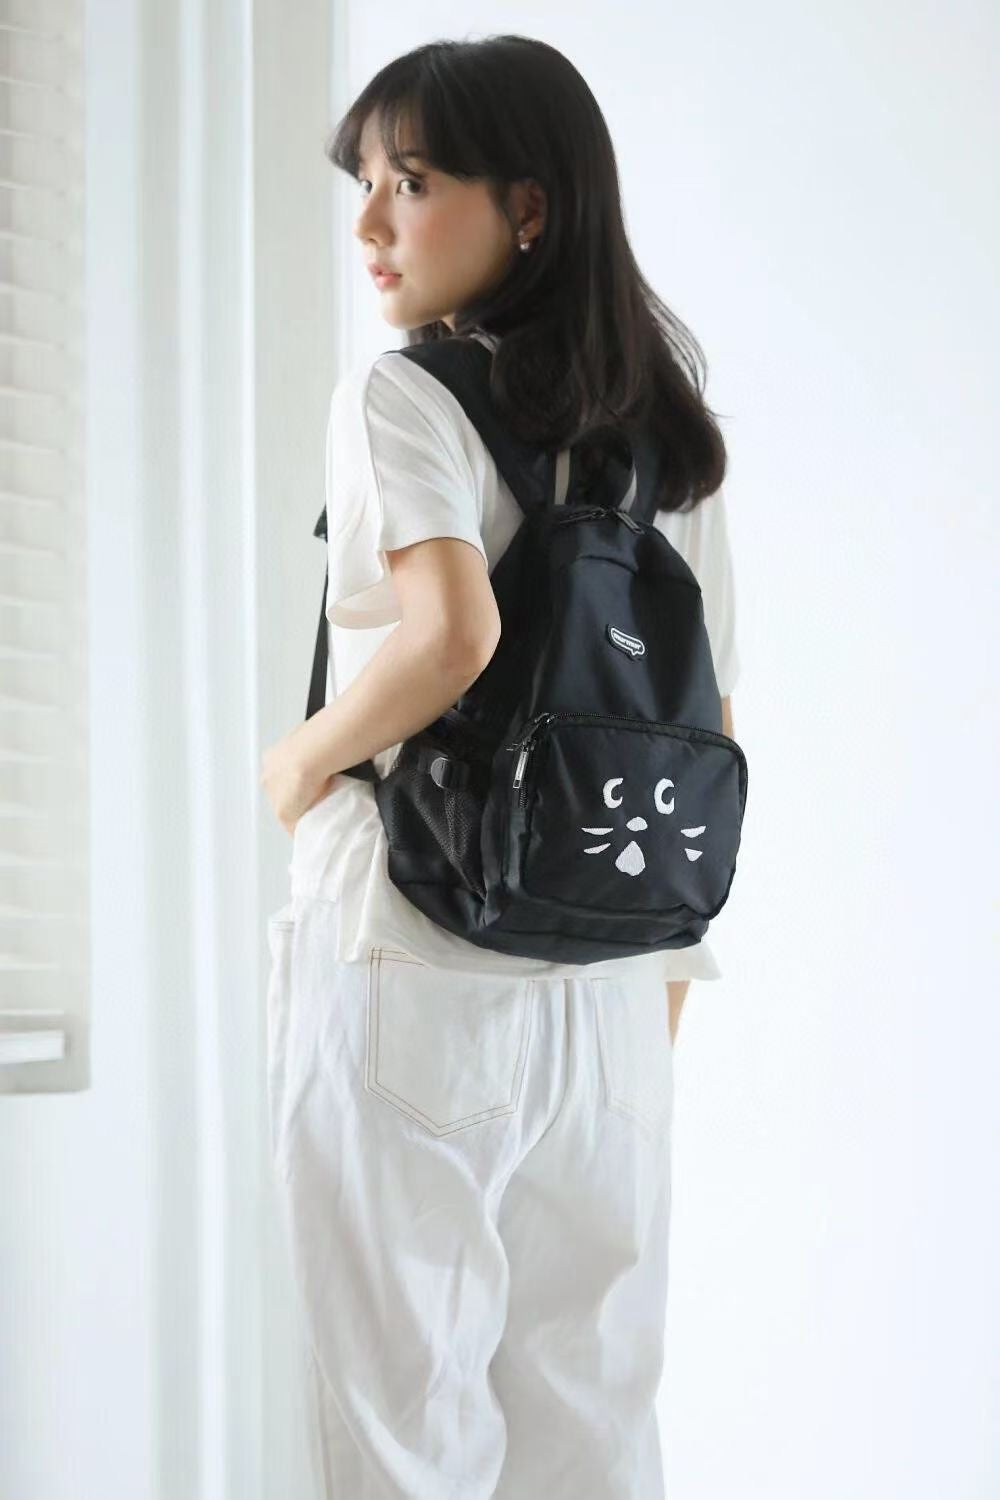 Nenet backpack + 斜咩袋